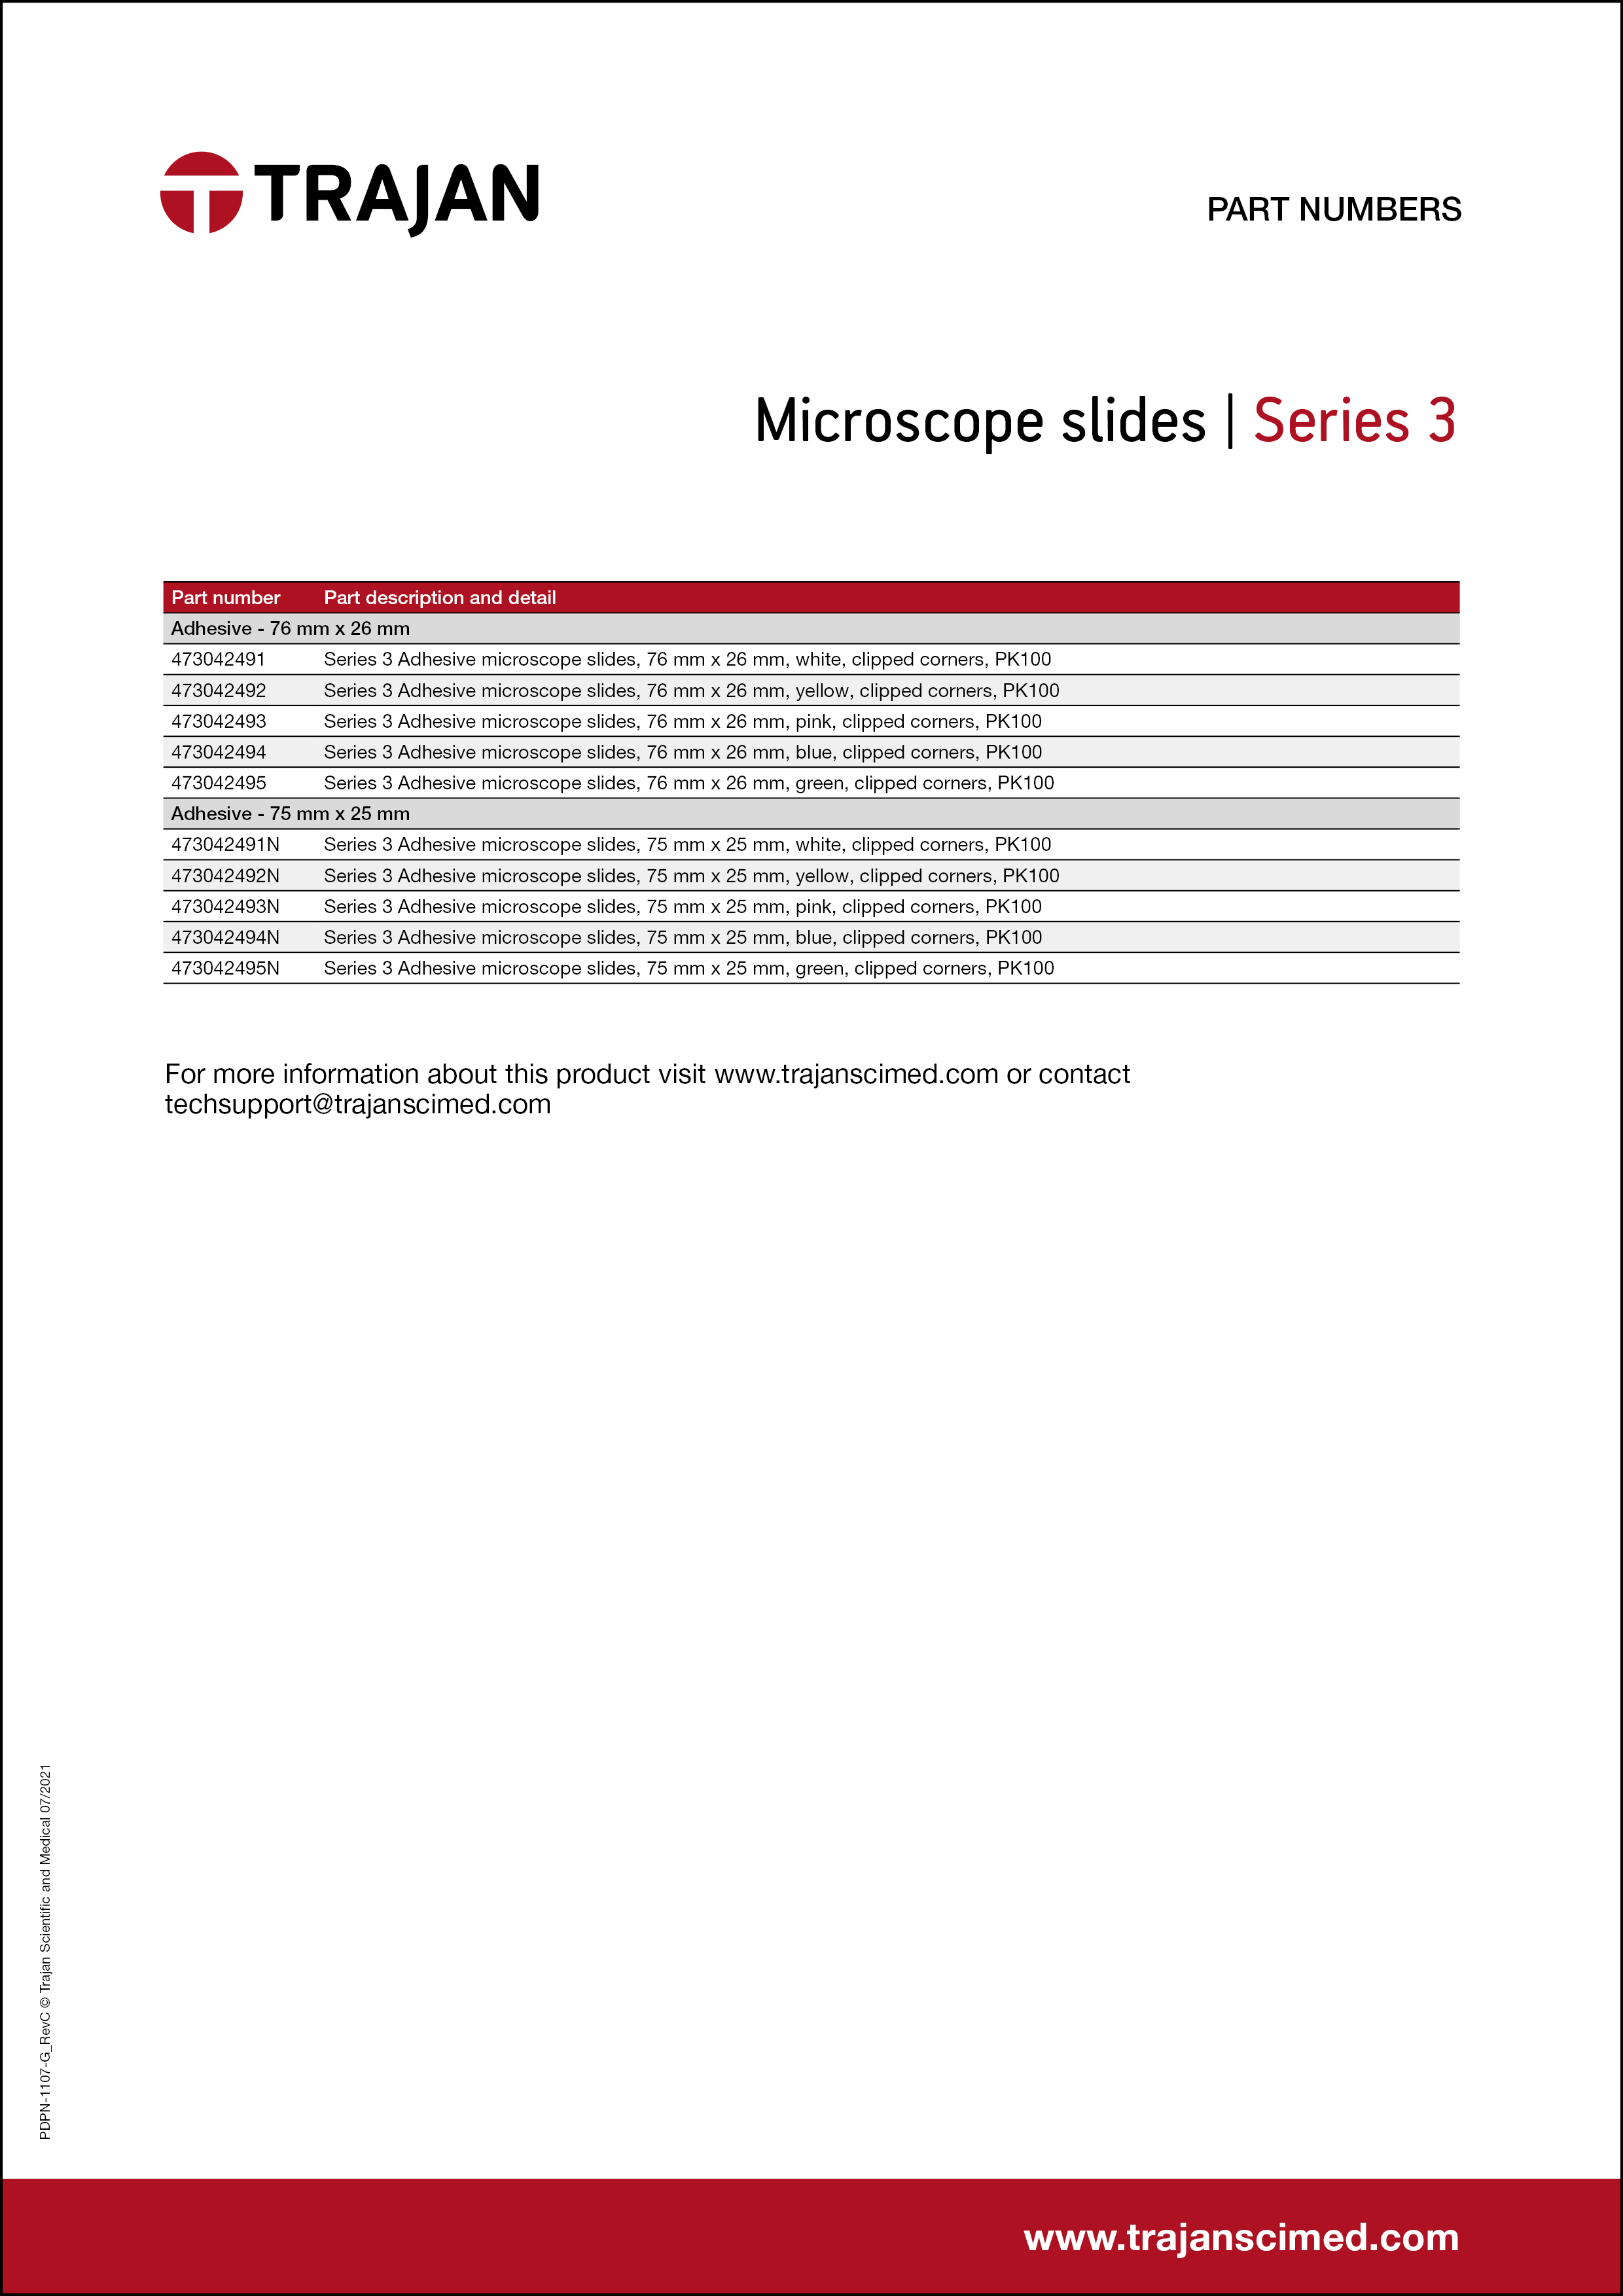 Part Number List - Series 3 microscope slides